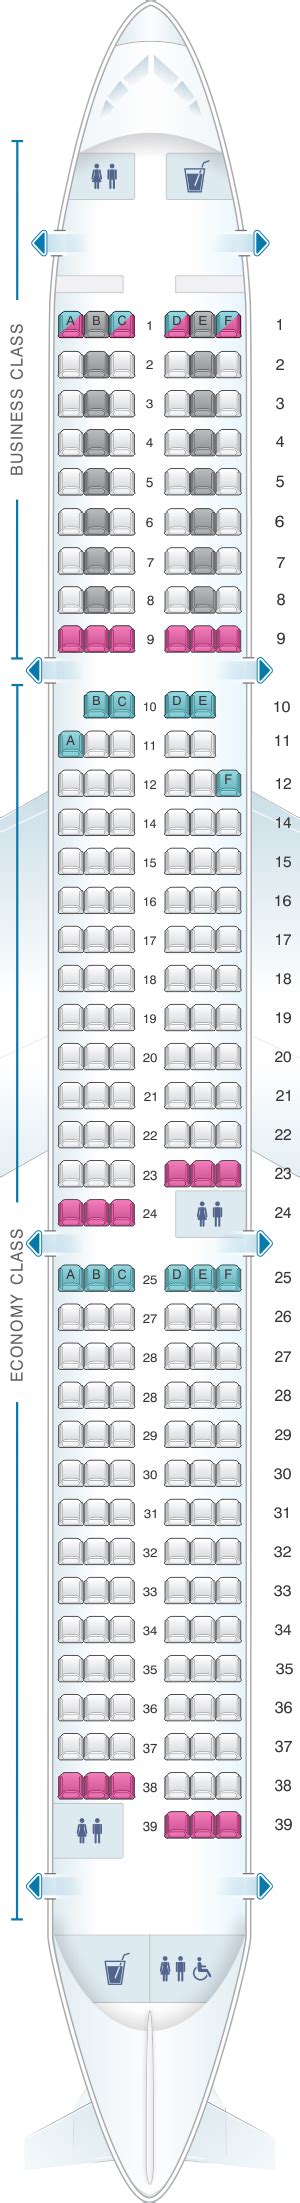 Plan De Cabine Swiss Airbus A321 100200 Seatmaestrofr